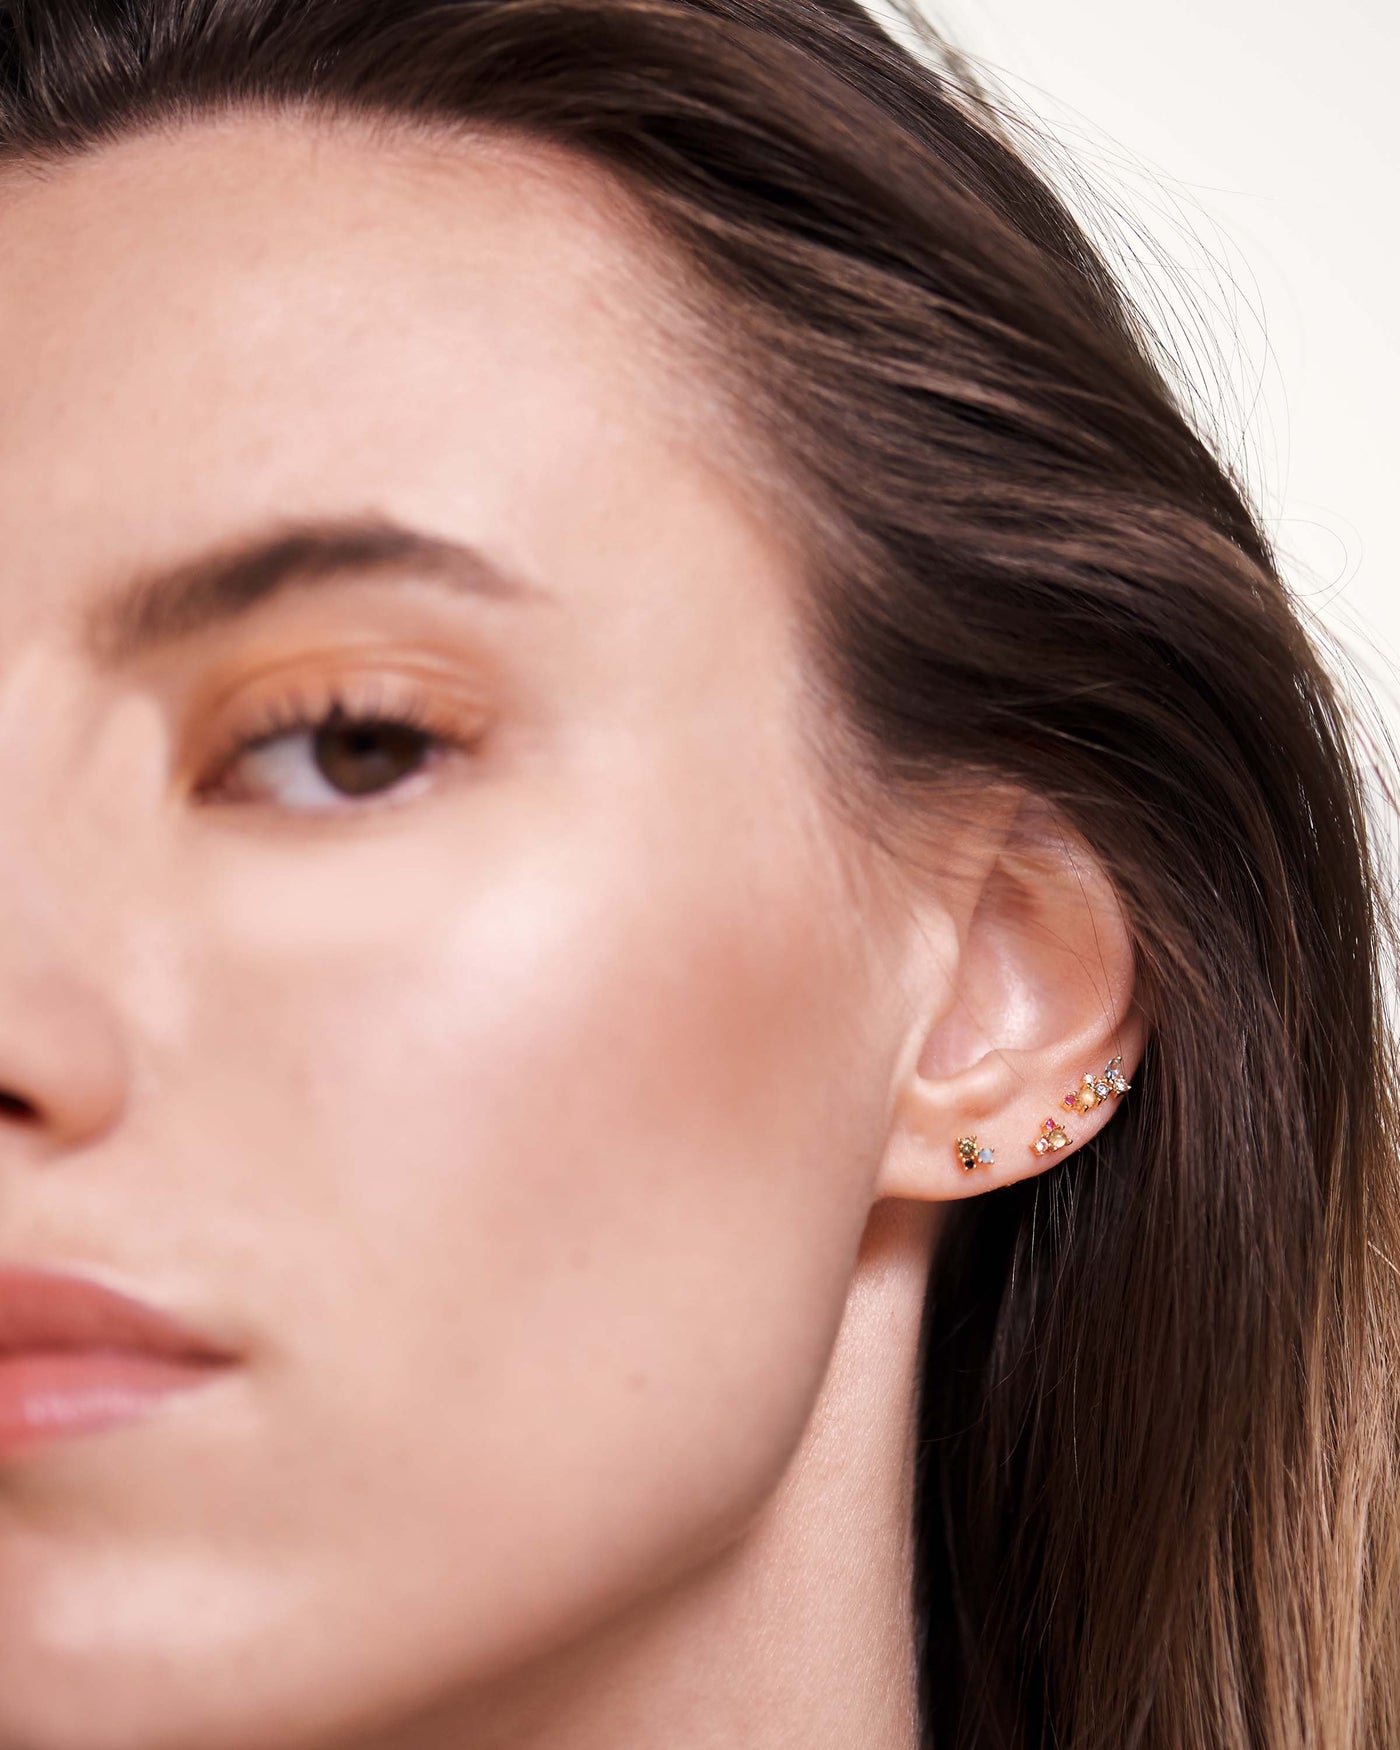 Aquamarine Crystal and zirconia earrings